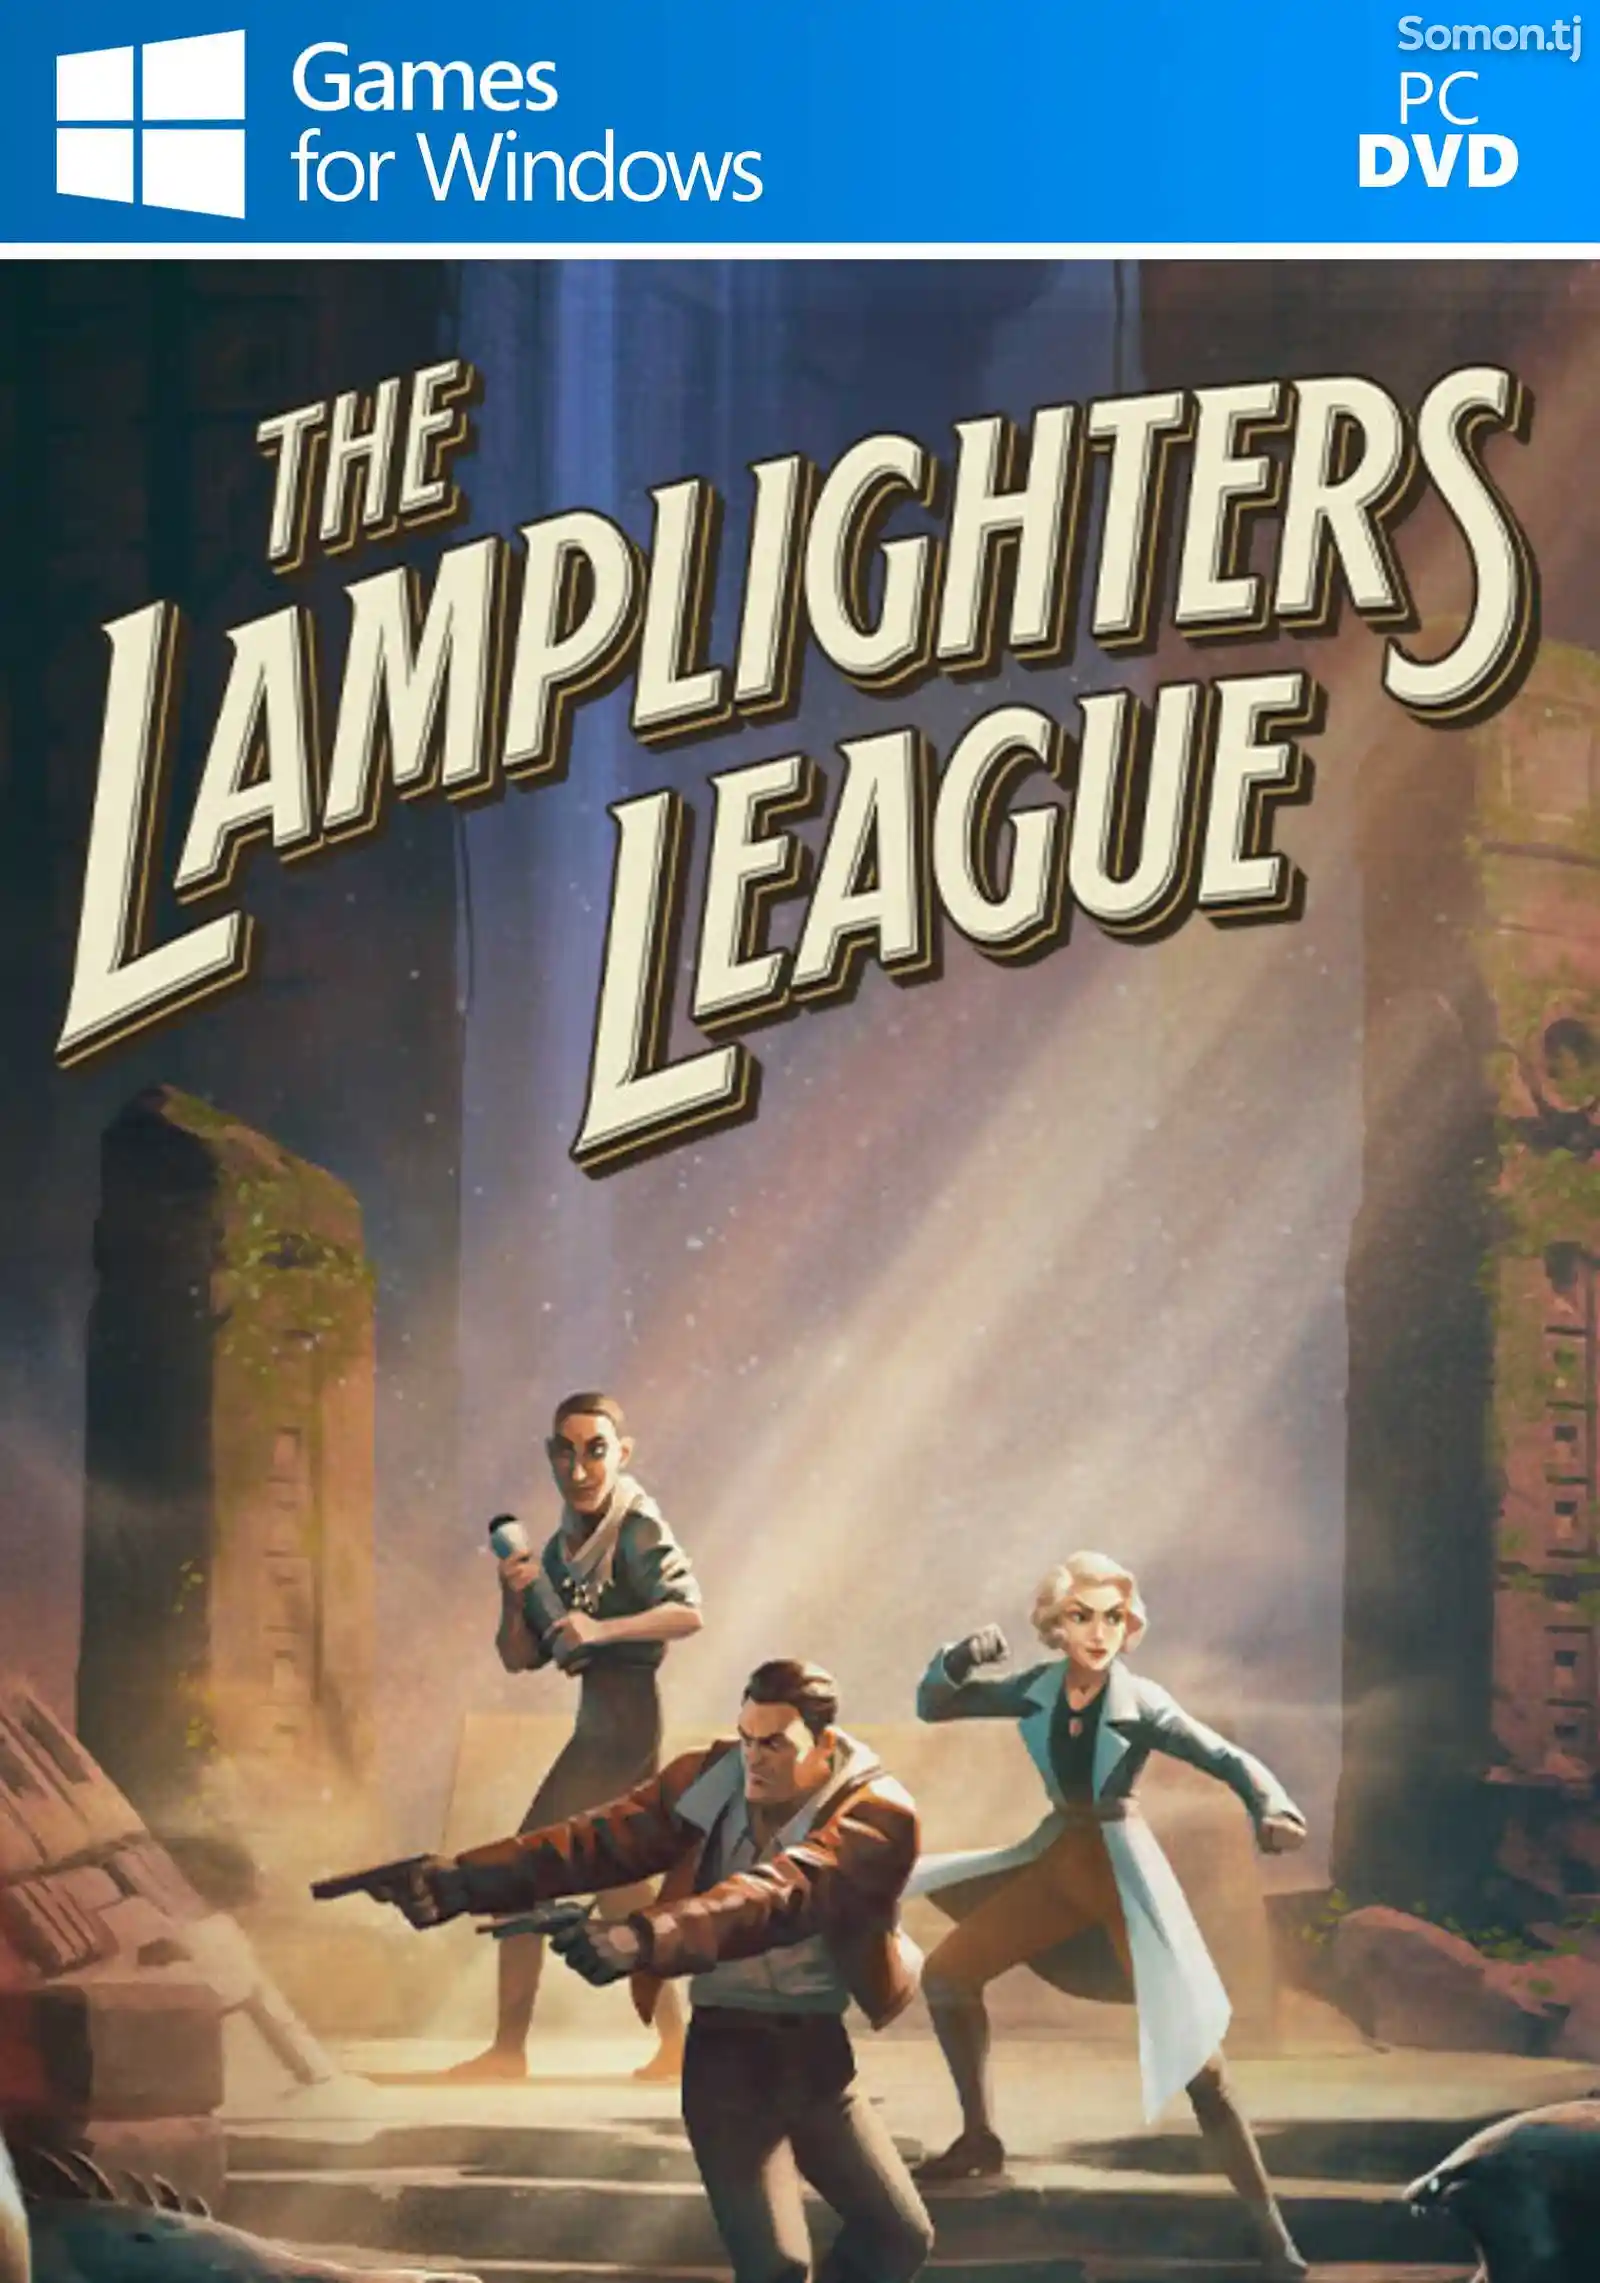 Игра Lamplighters league для компьютера-пк-pc-1